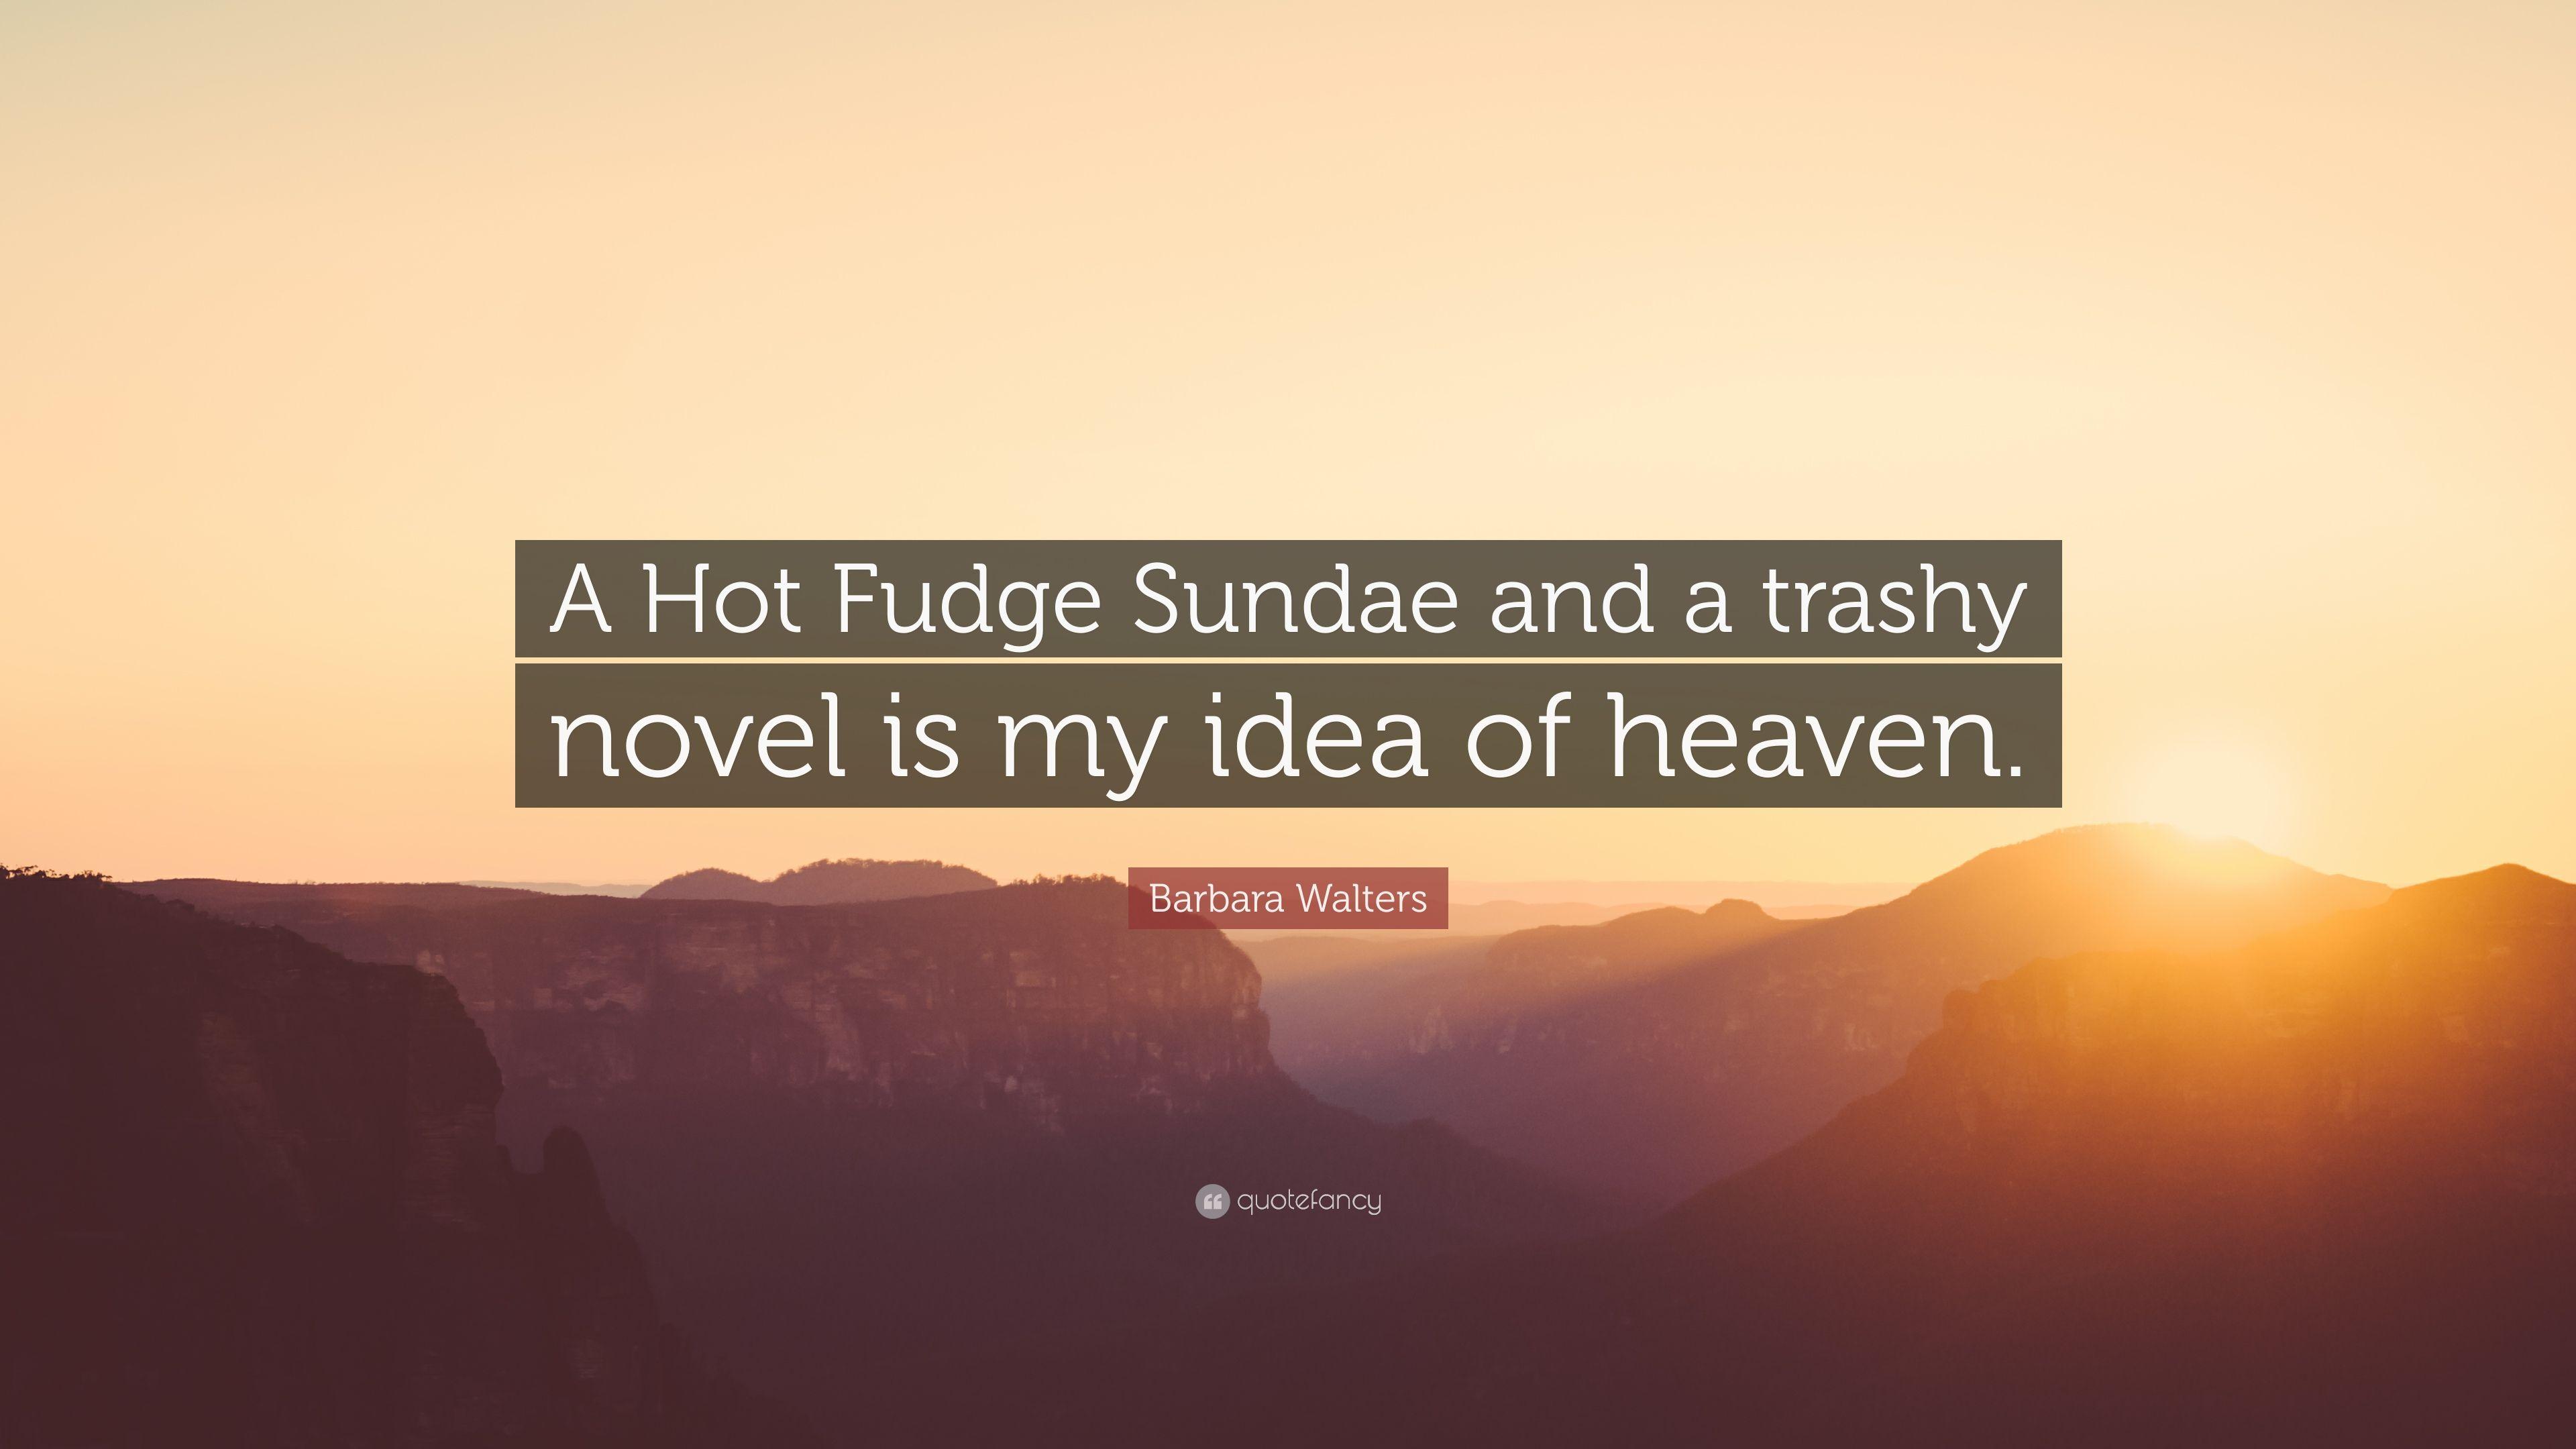 Barbara Walters Quote: “A Hot Fudge Sundae and a trashy novel is my